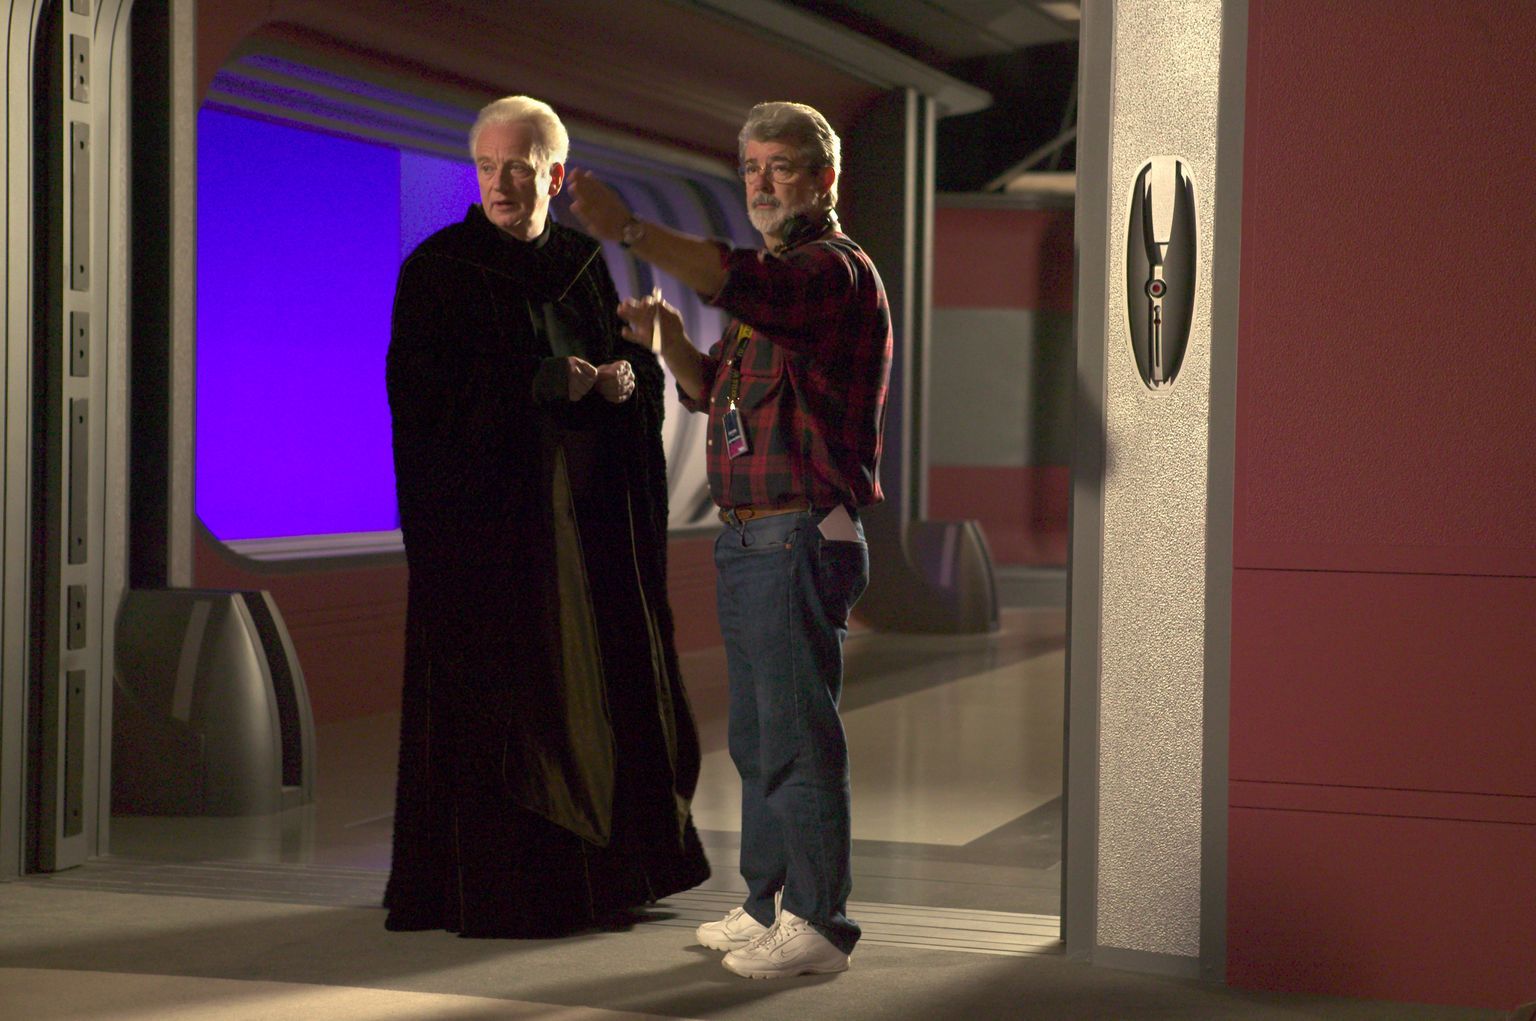 George Lucas and Ian McDiarmid in Zvaigzdziu karai. Situ kerstas (2005)